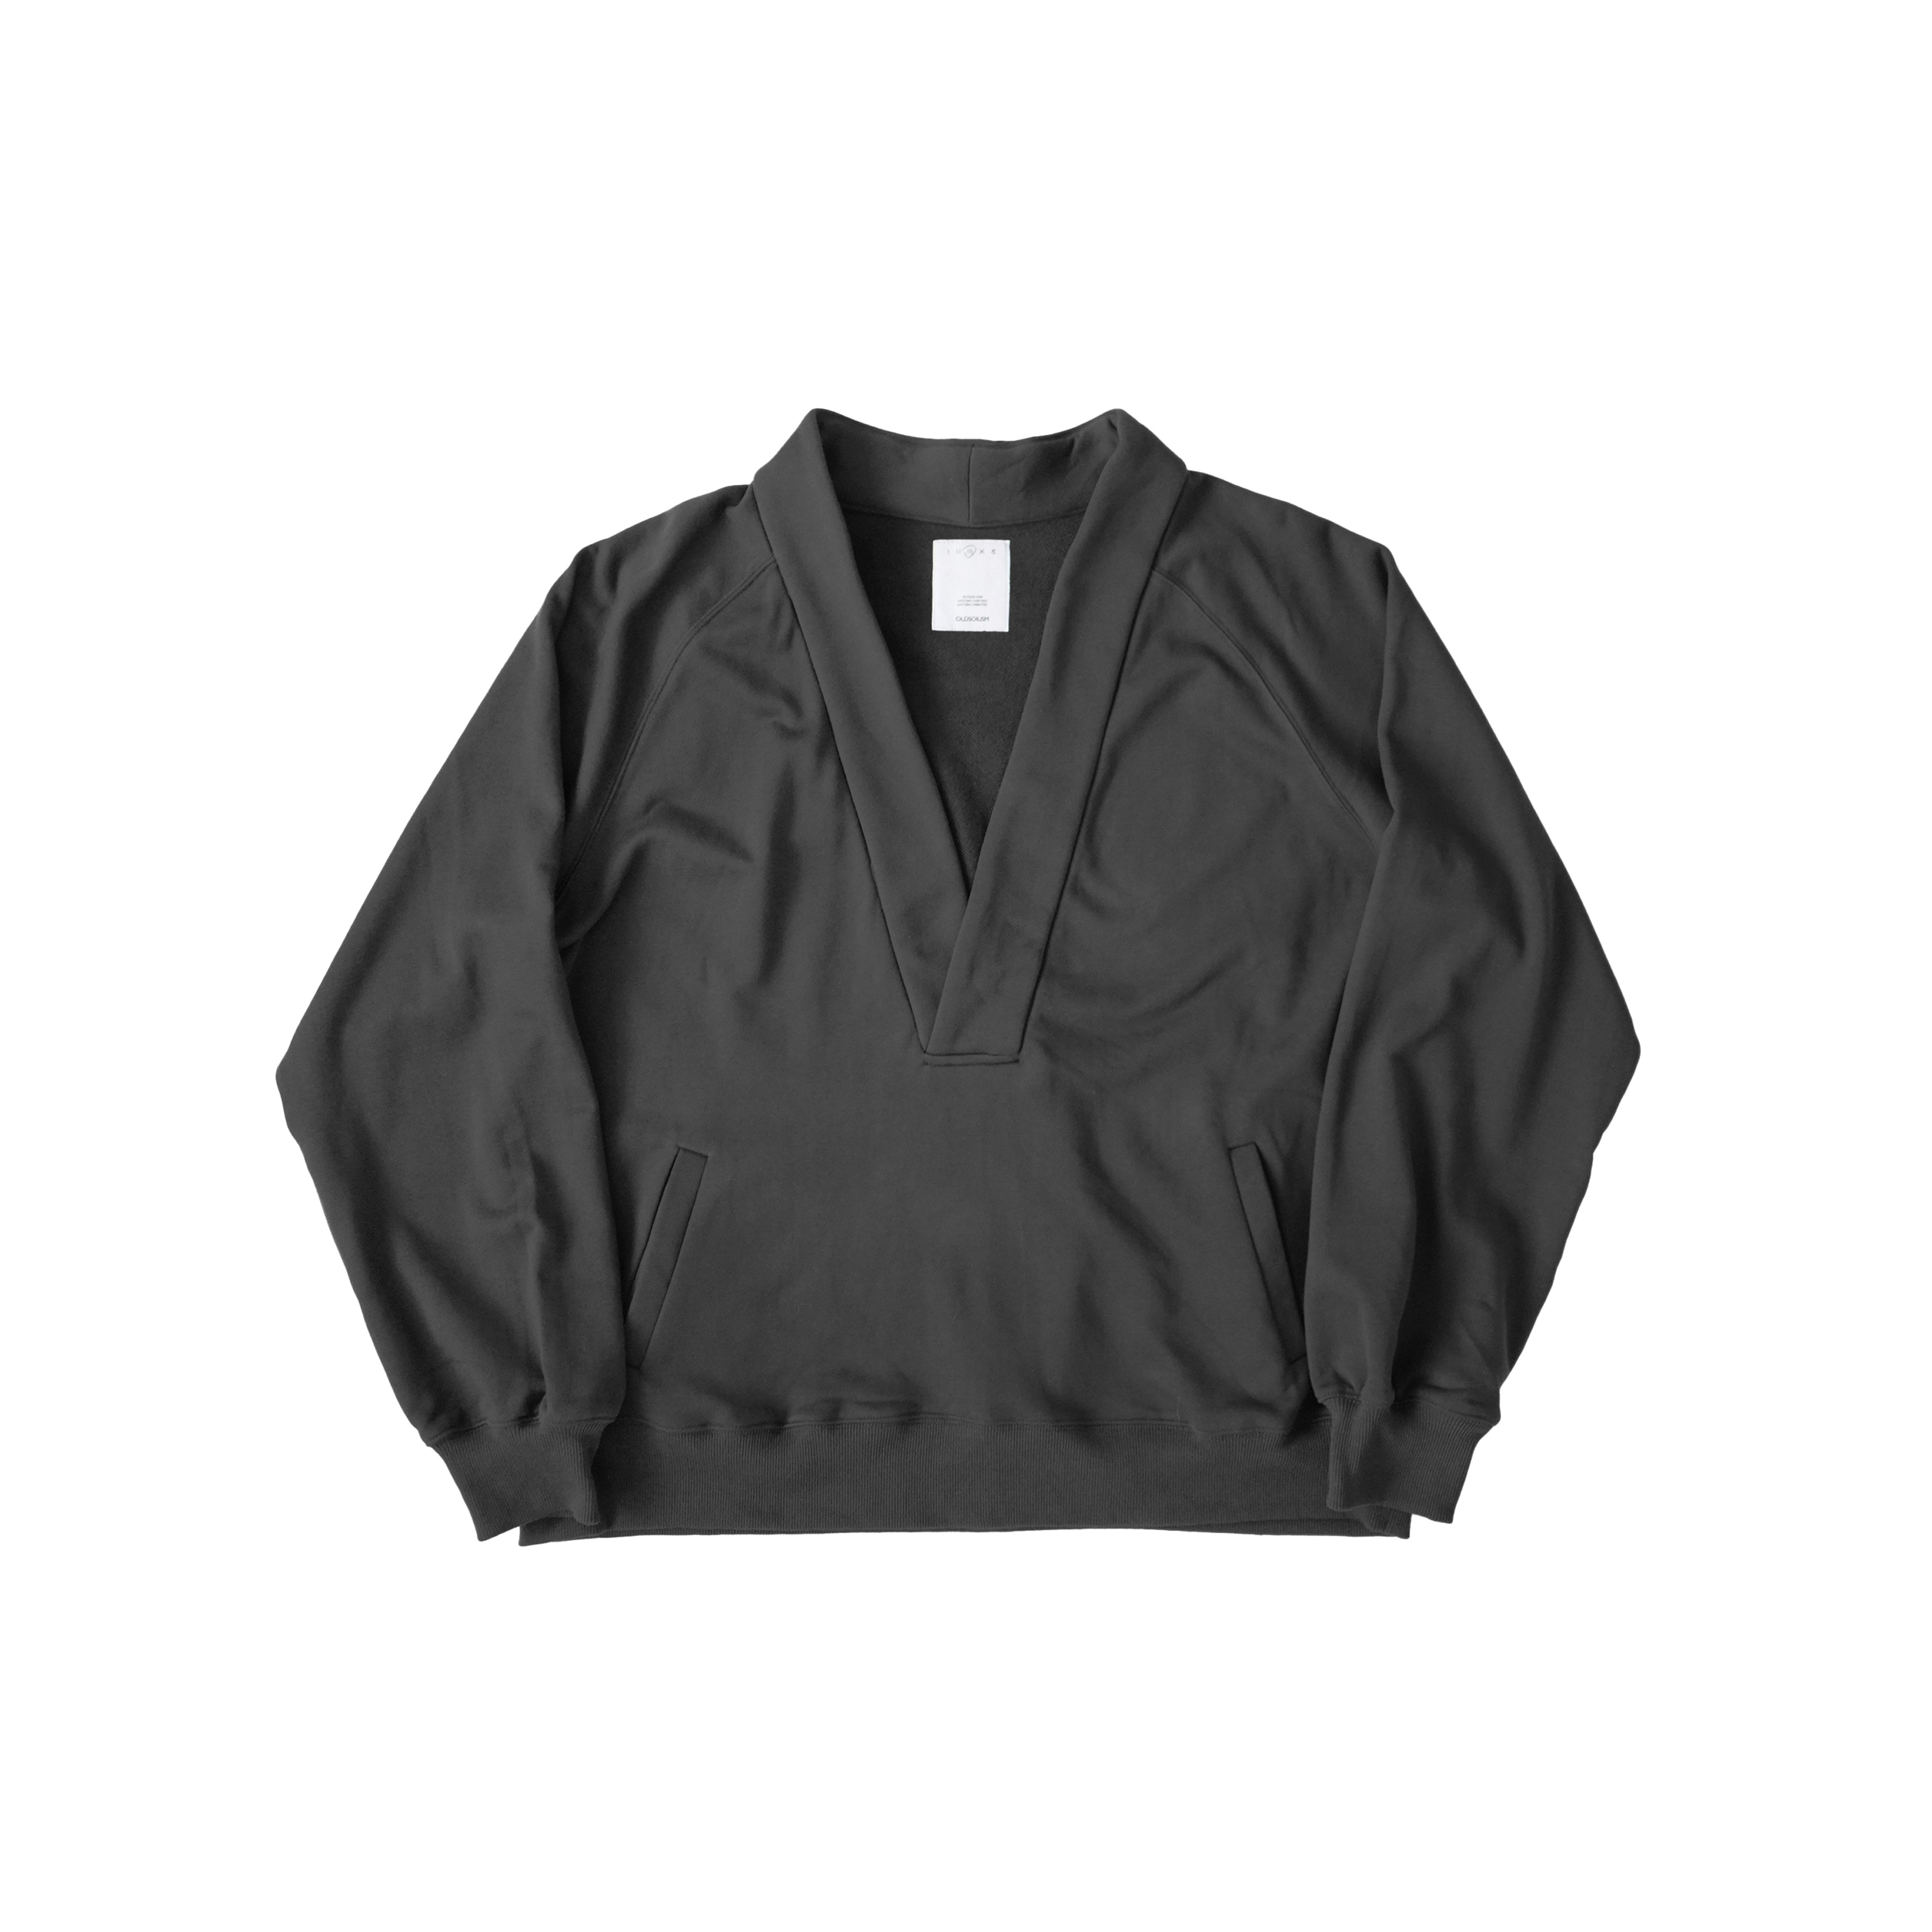 Oldsoil - OS Kimono Sweatshirt - 2 Colors